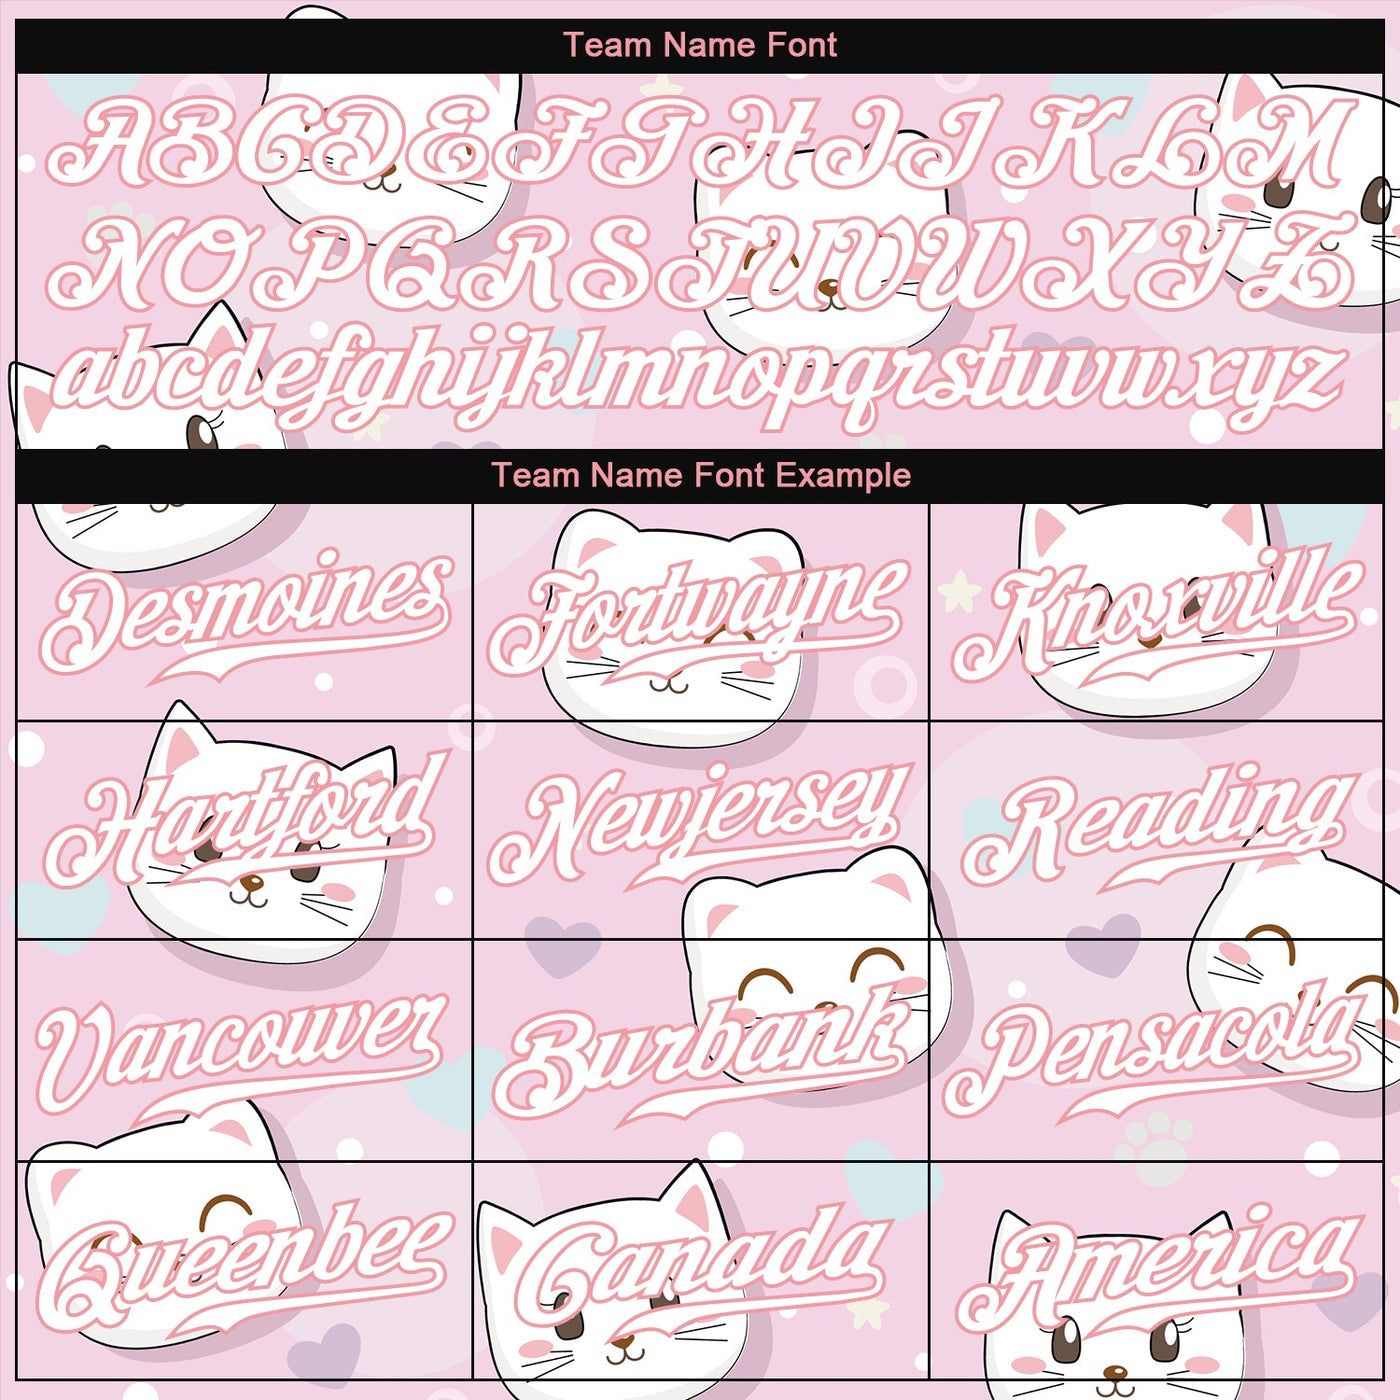 Custom Light Pink White-Light Pink 3D Pattern Design Cats Authentic Baseball Jersey